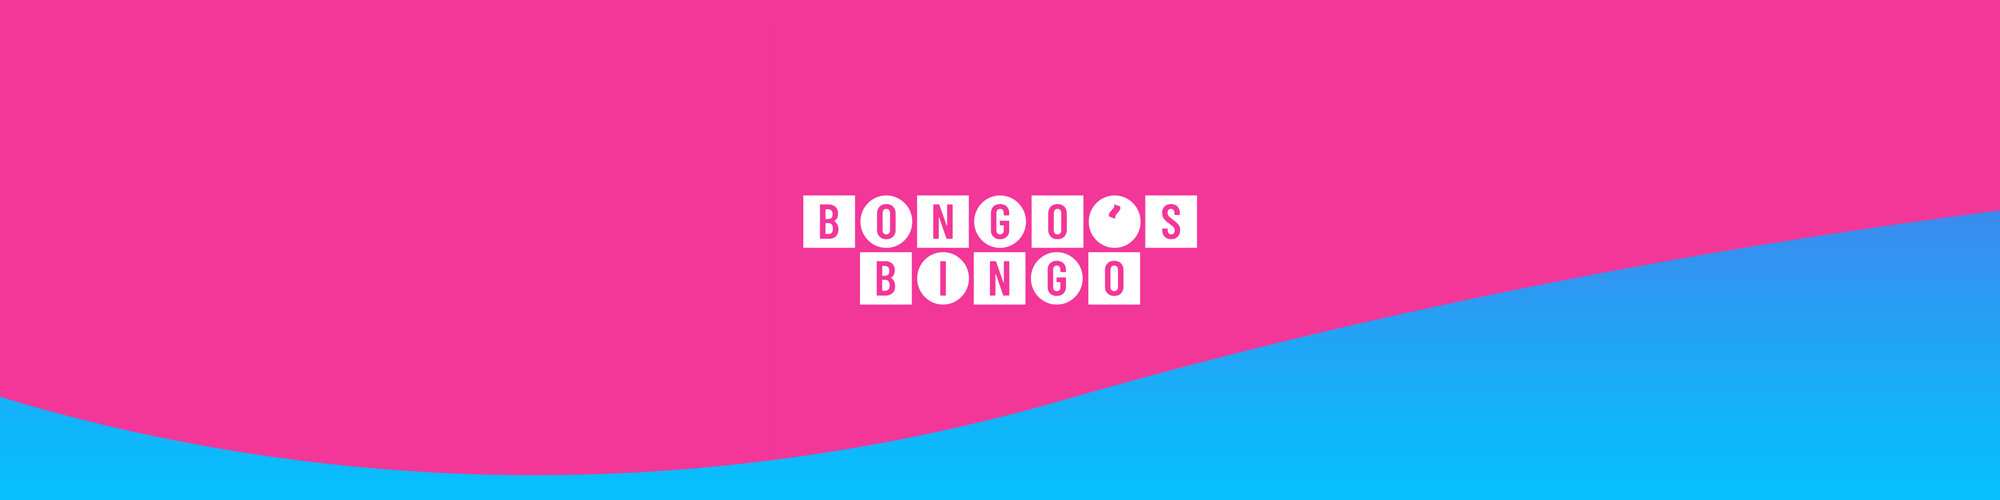 Bongos Bingo Alternative on EazeGames